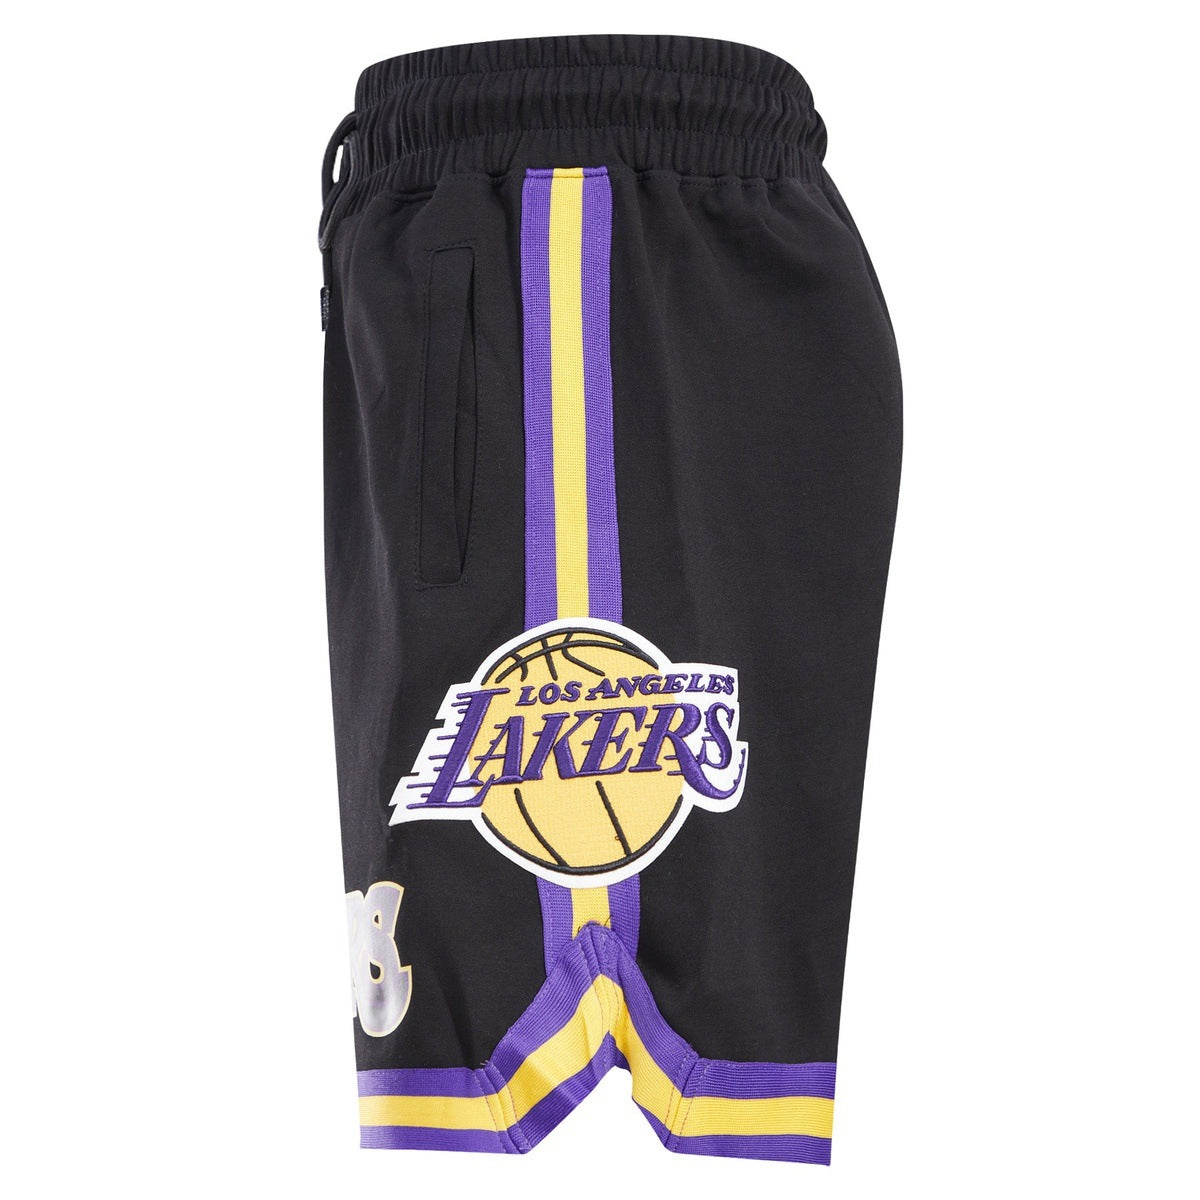 Men's Pro Standard Black NBA Los Angeles Lakers Pro Team Shorts